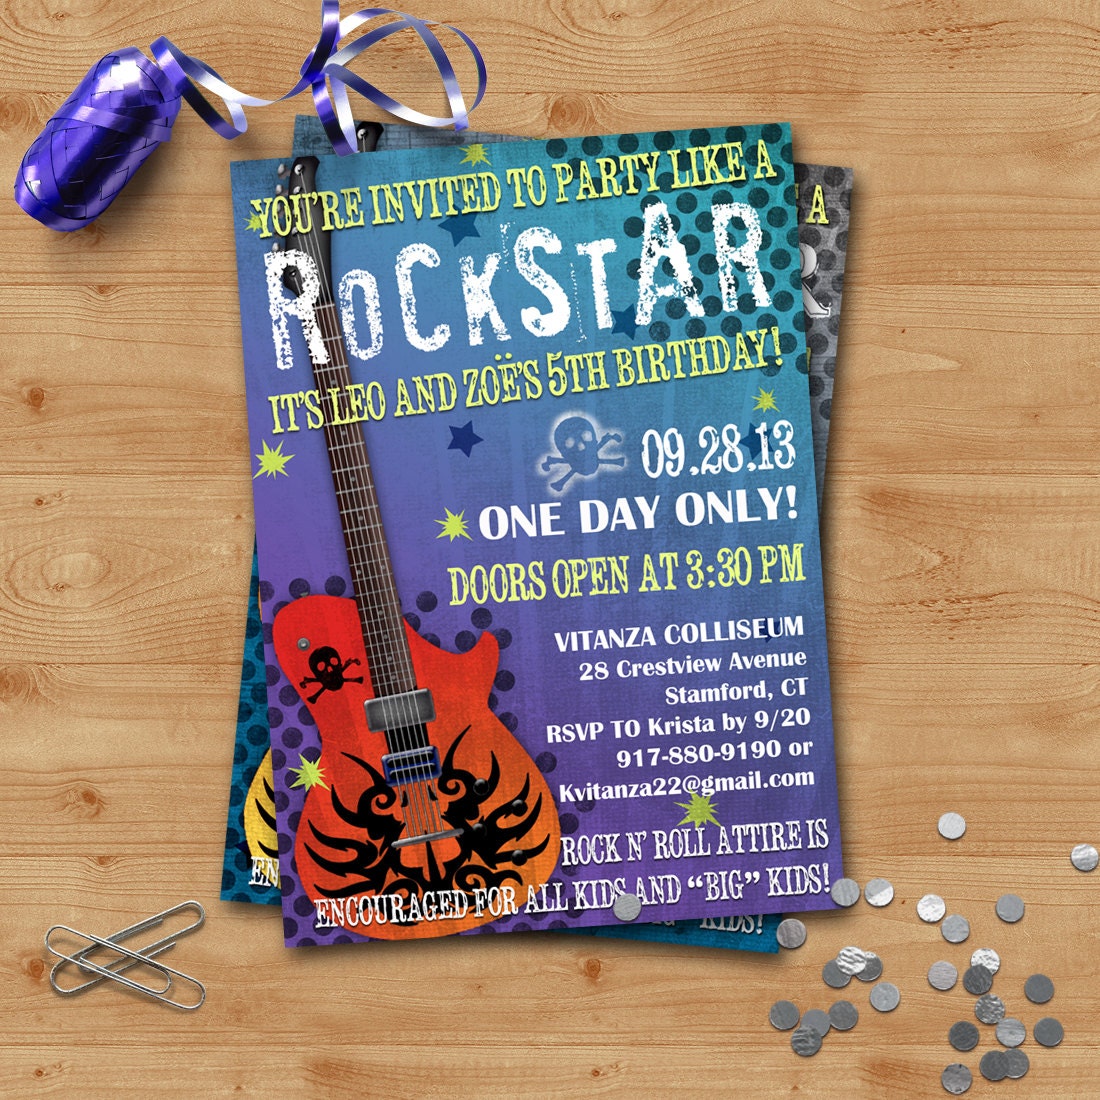 rockstar-birthday-invitation-party-like-a-rockstar-rock-n